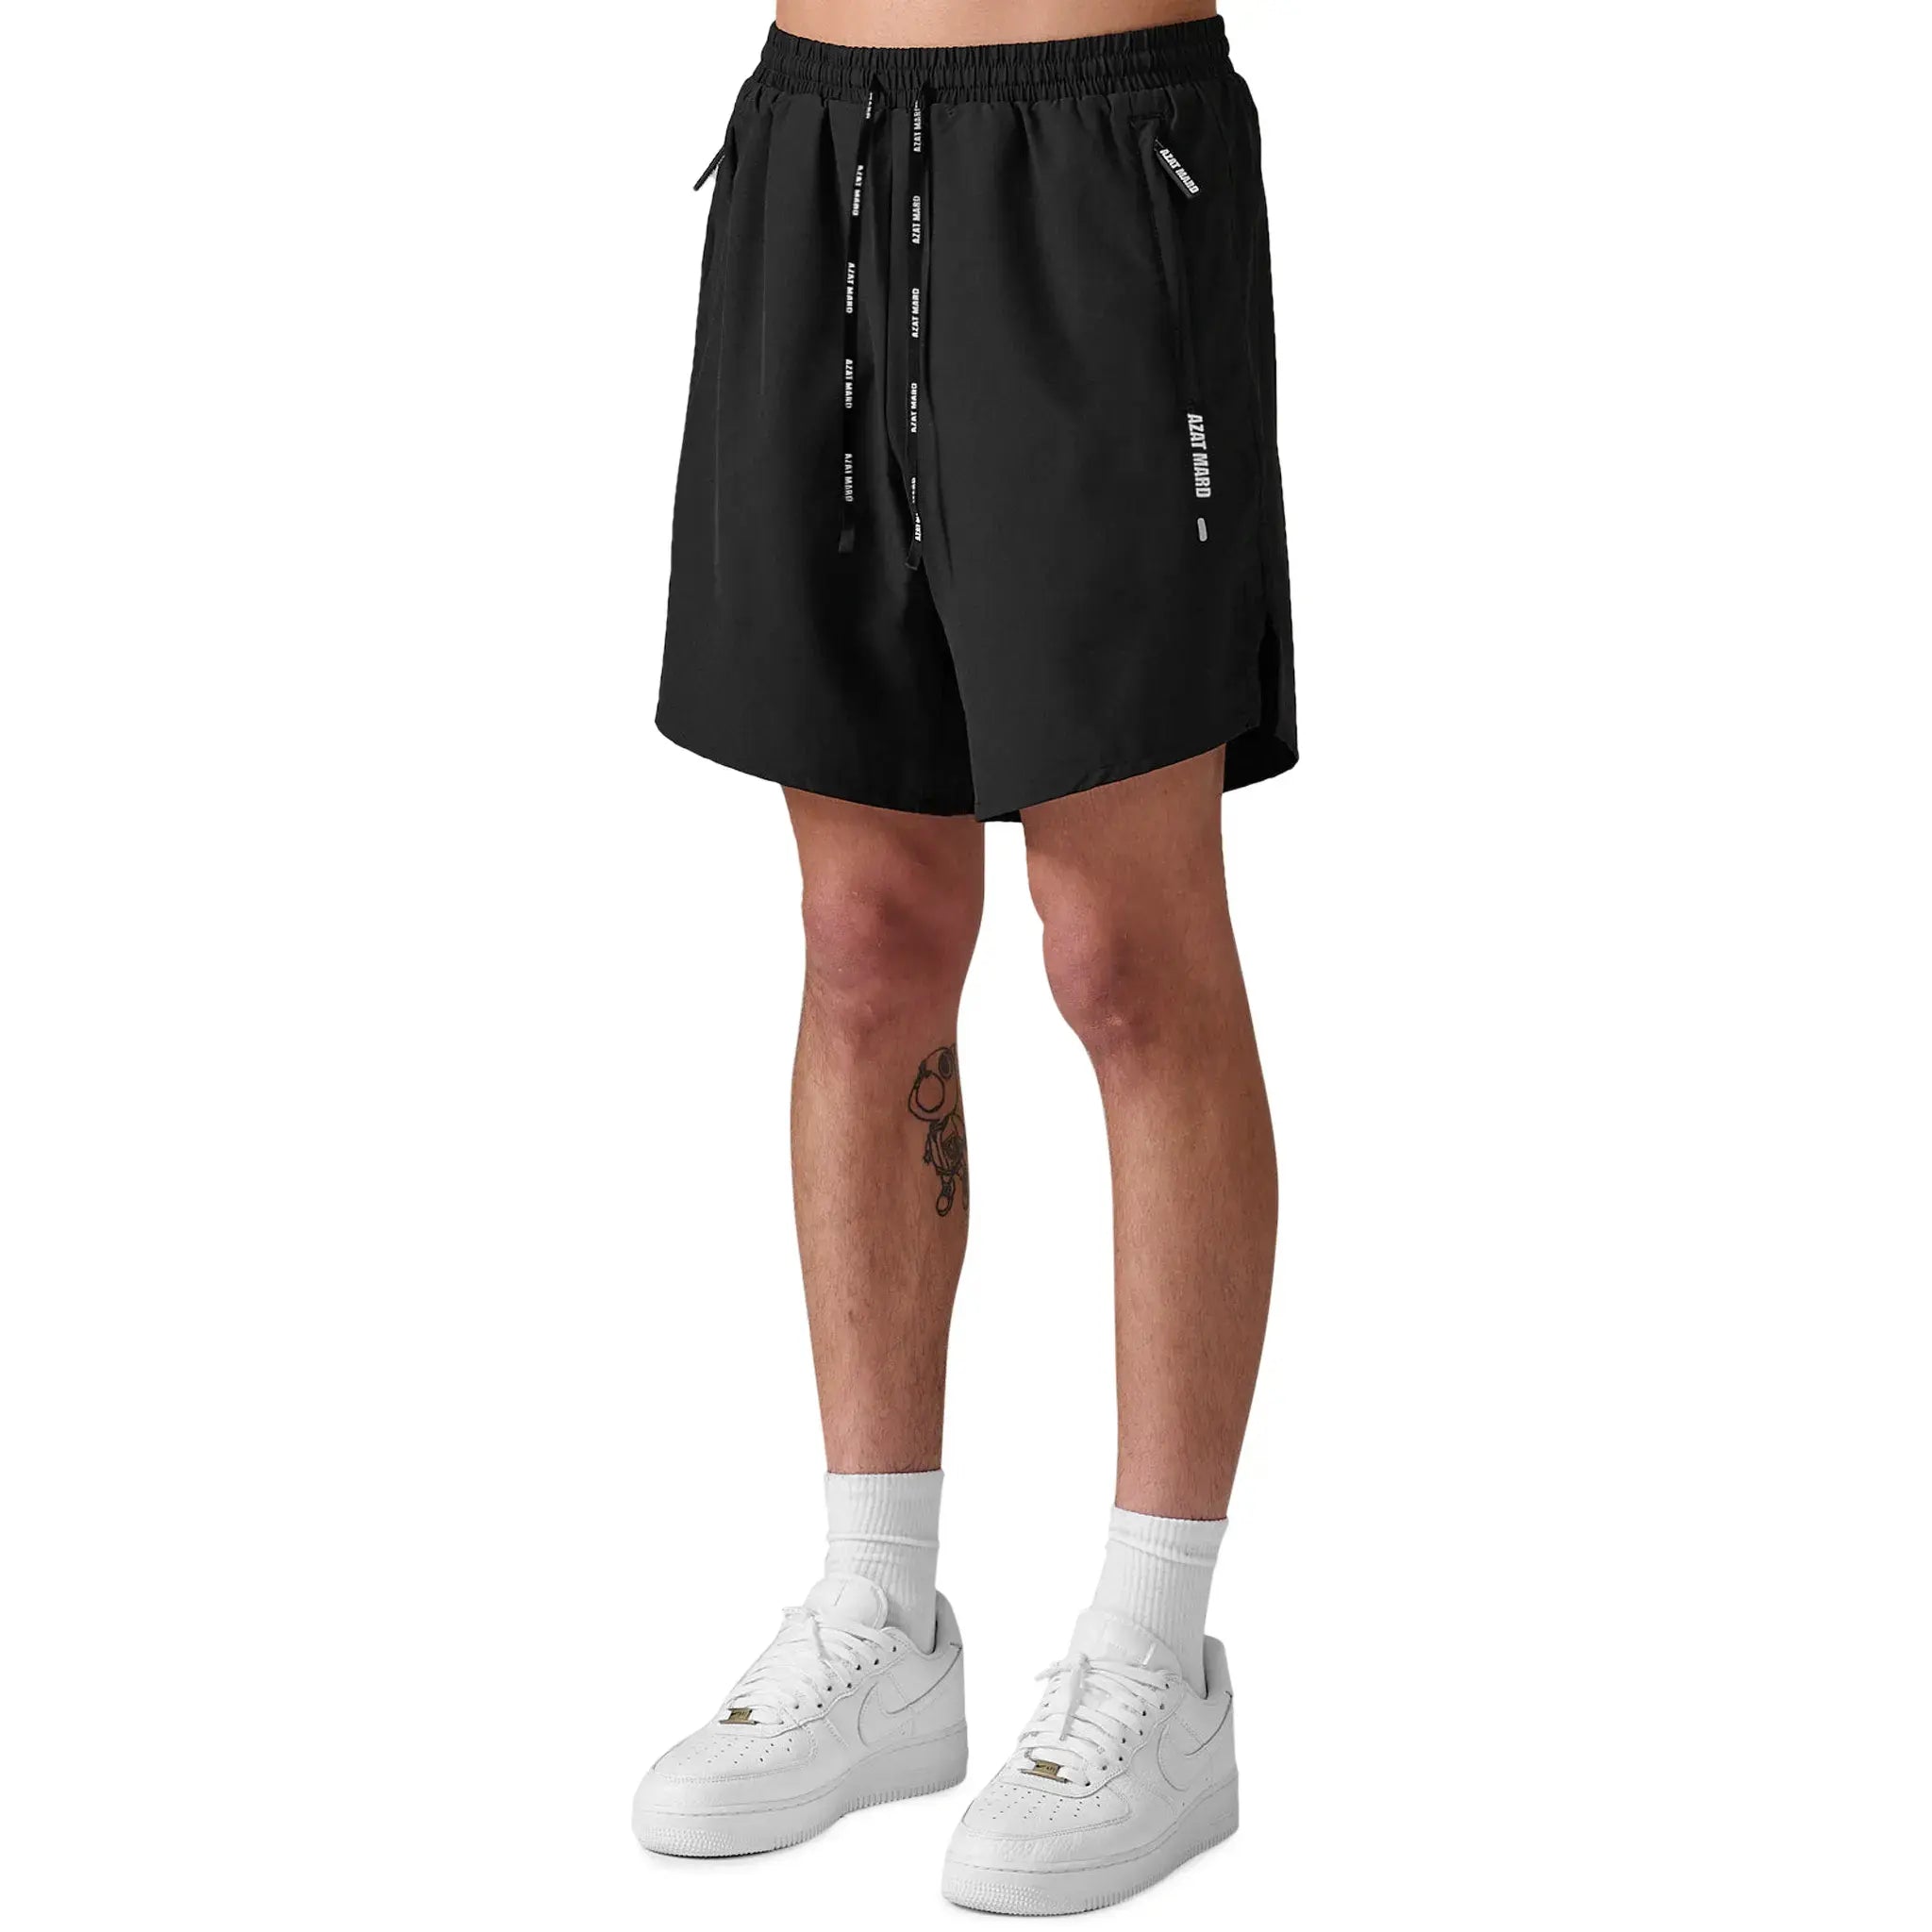 Model side view of Azat Mard Activewear Shorts Black FW22101